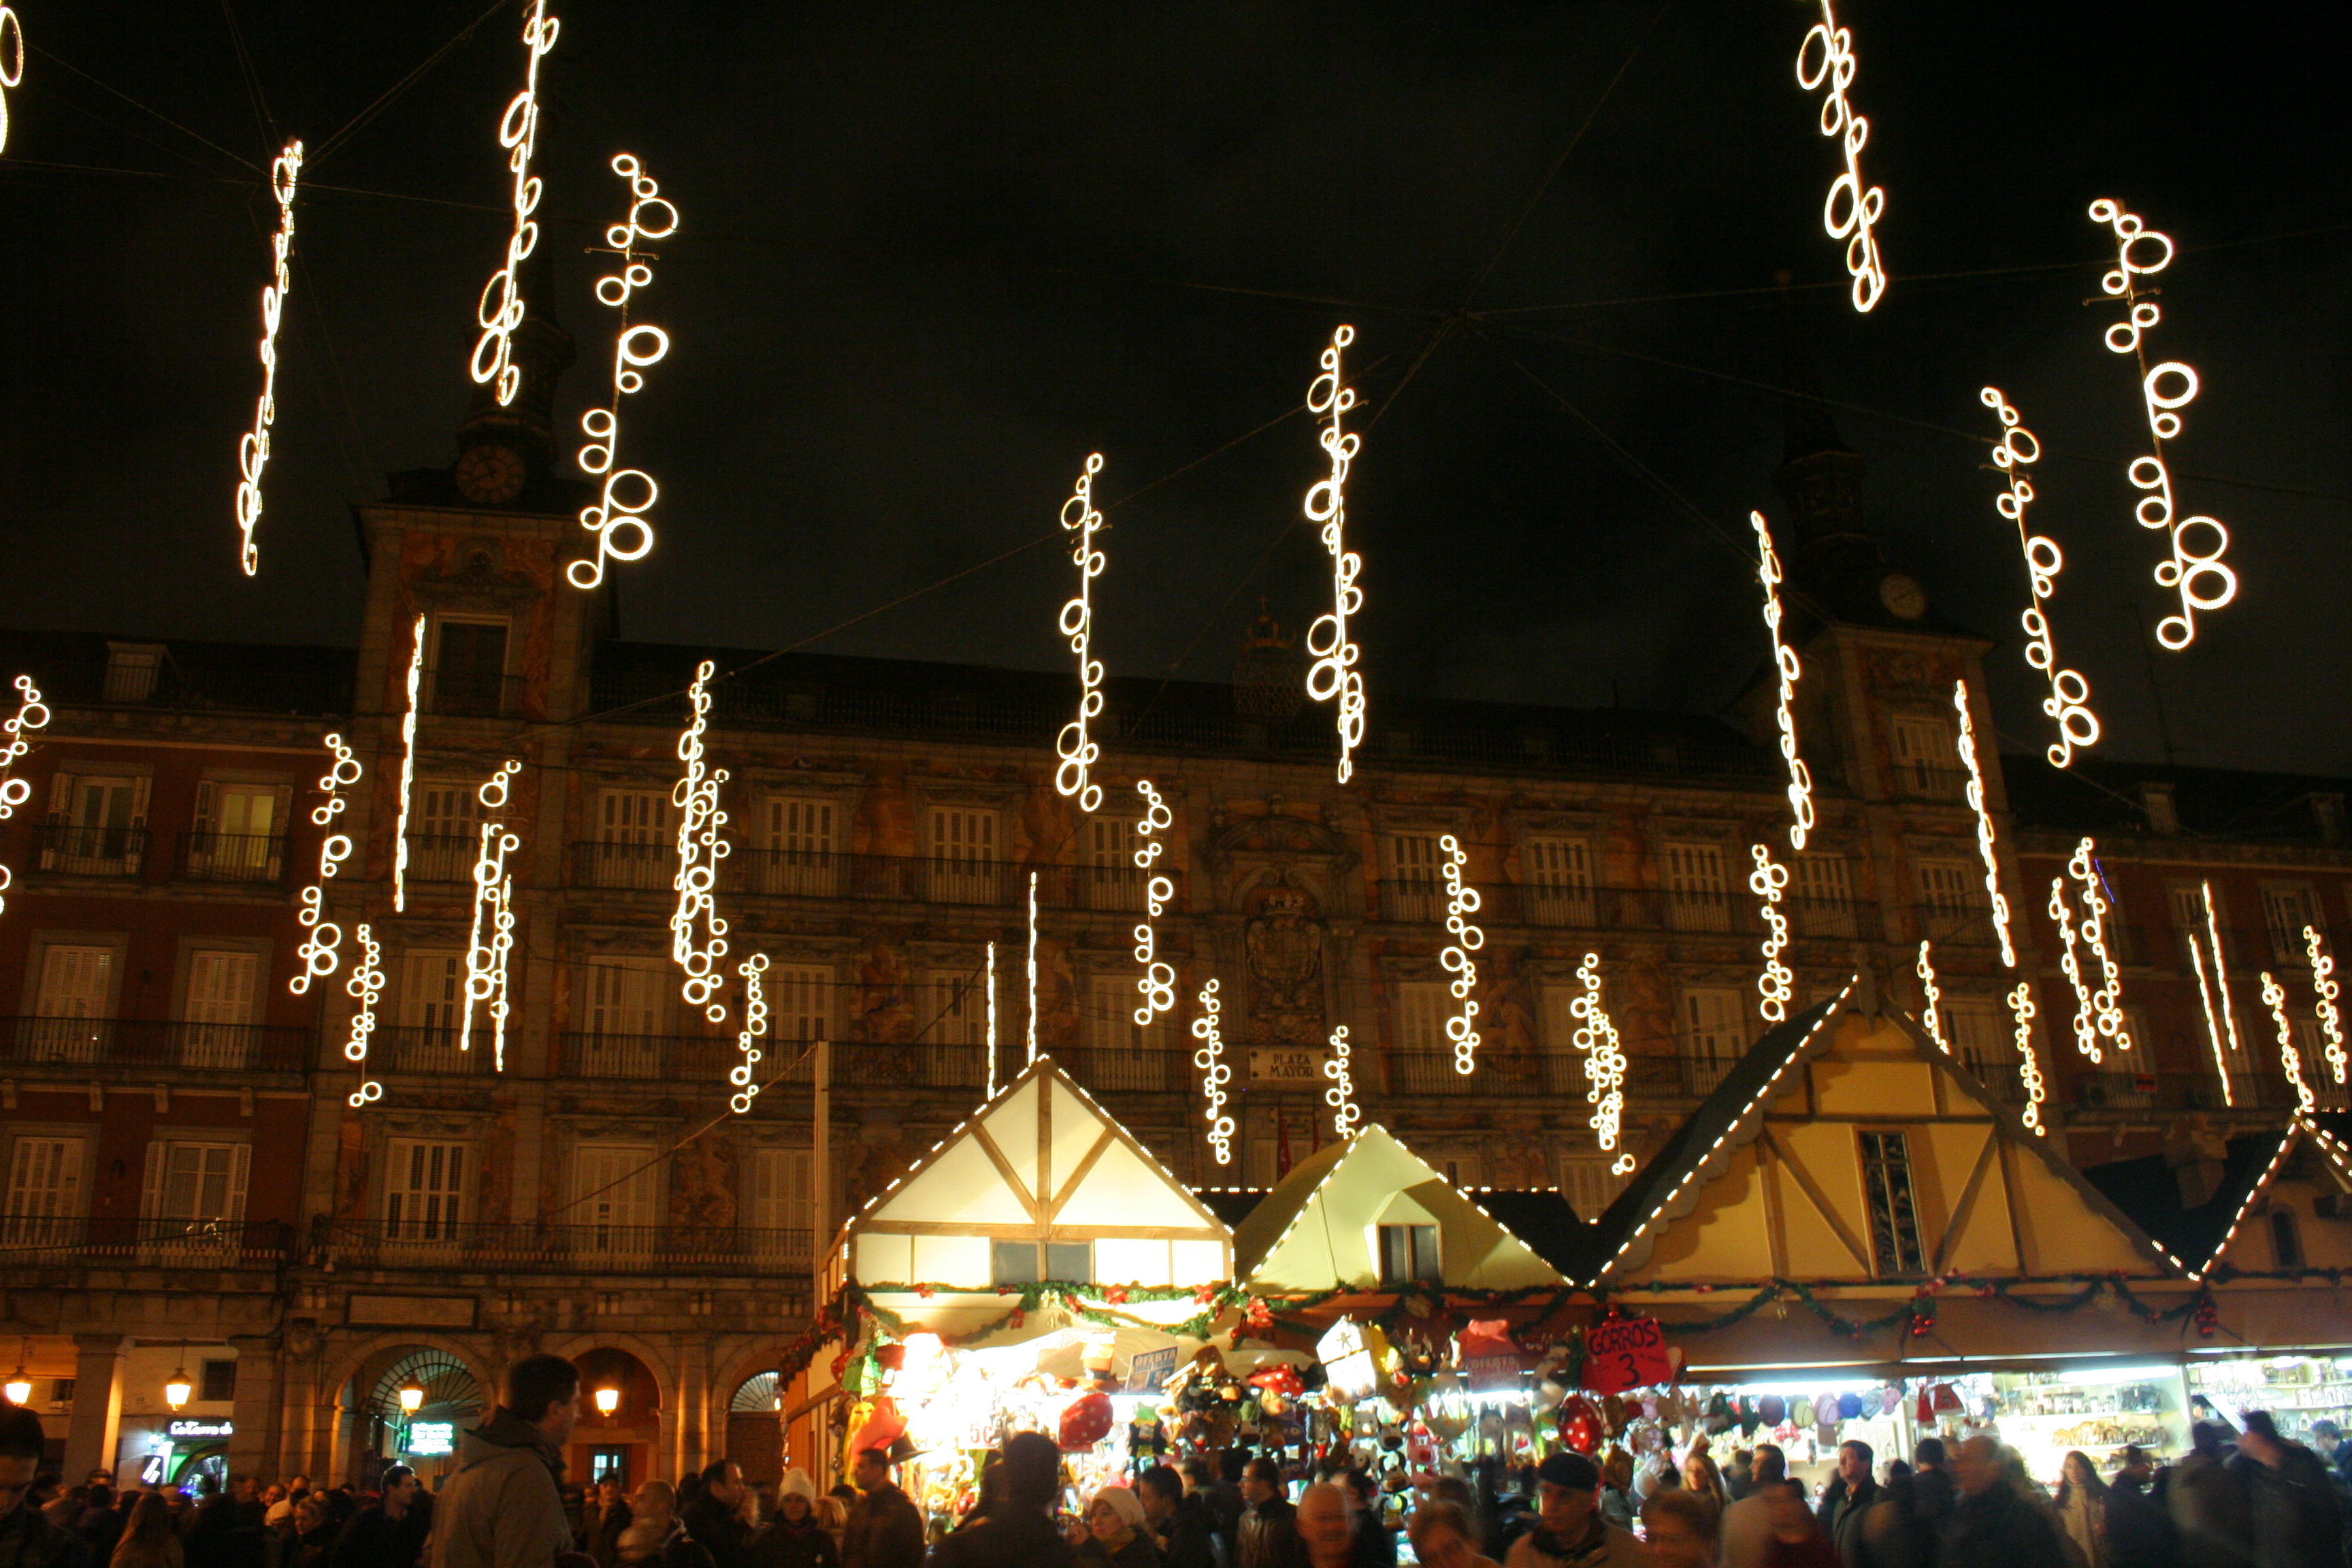 Xmas market and lights at Plaza Mayor, Madrid